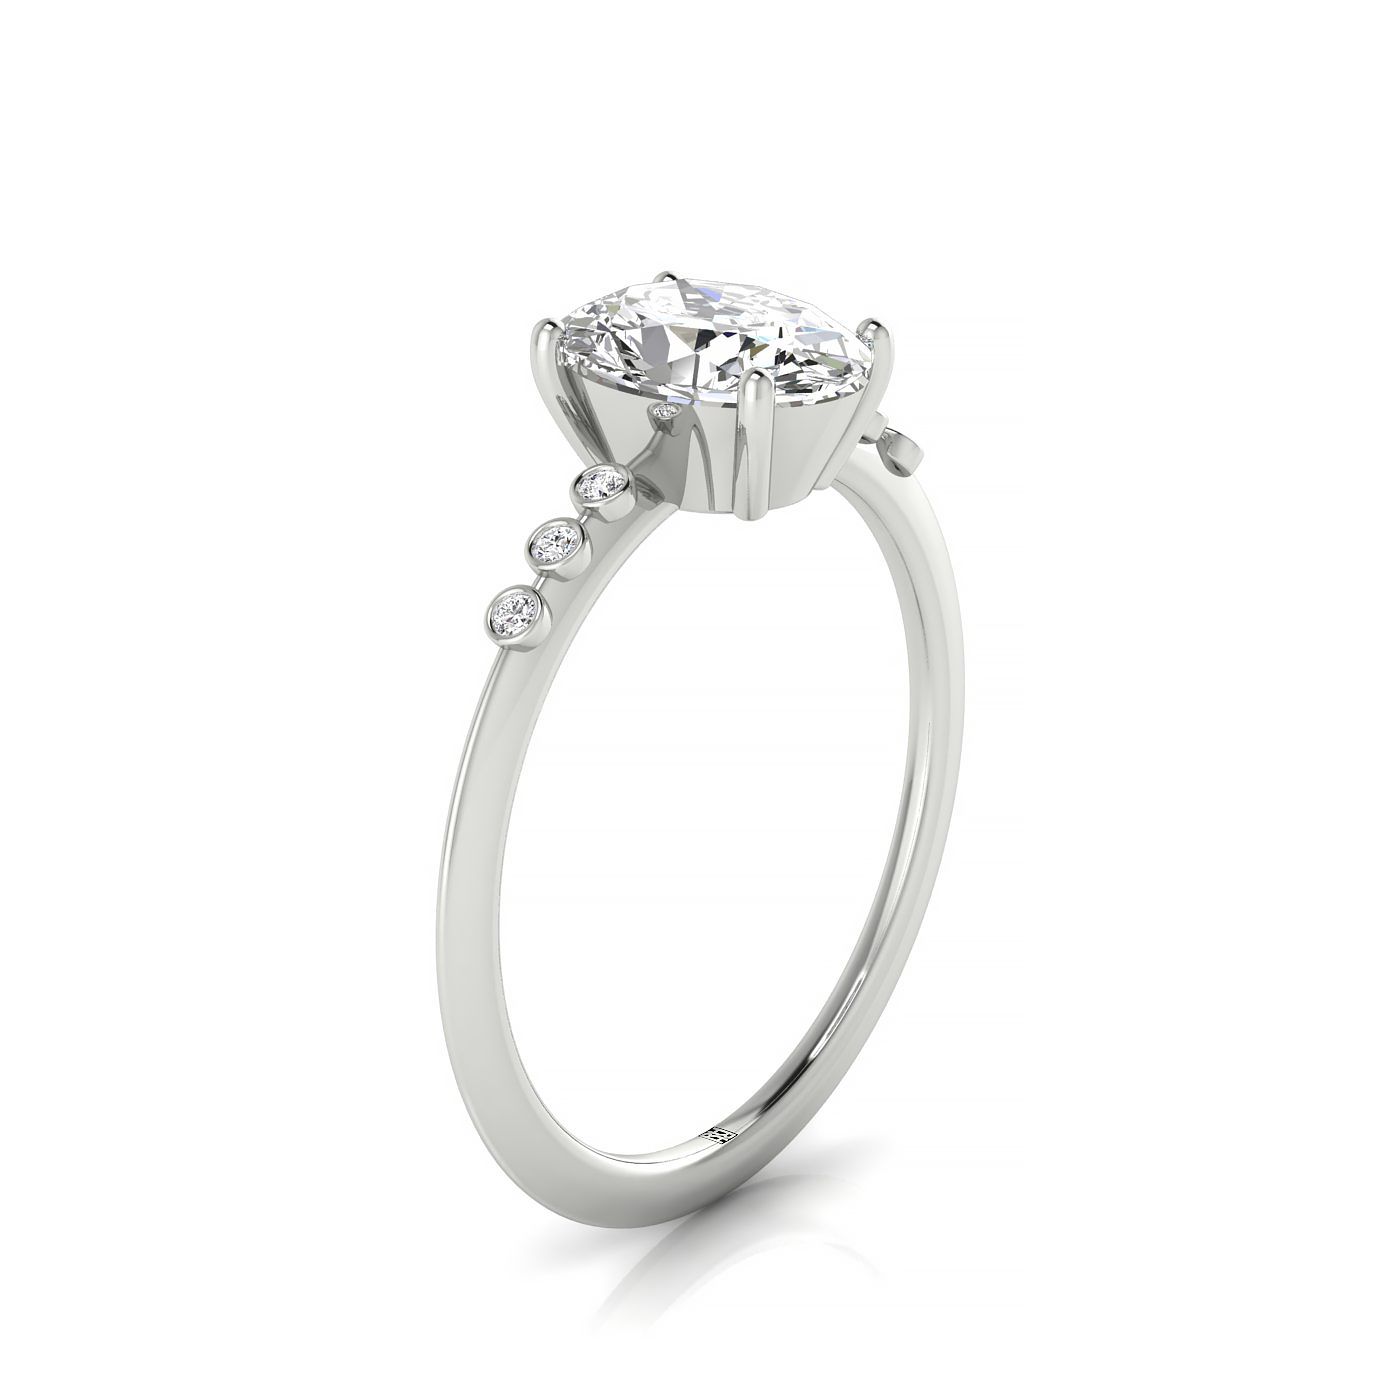 14kw Oval Engagement Ring With 6 Bezel Set Round Diamonds On Shank